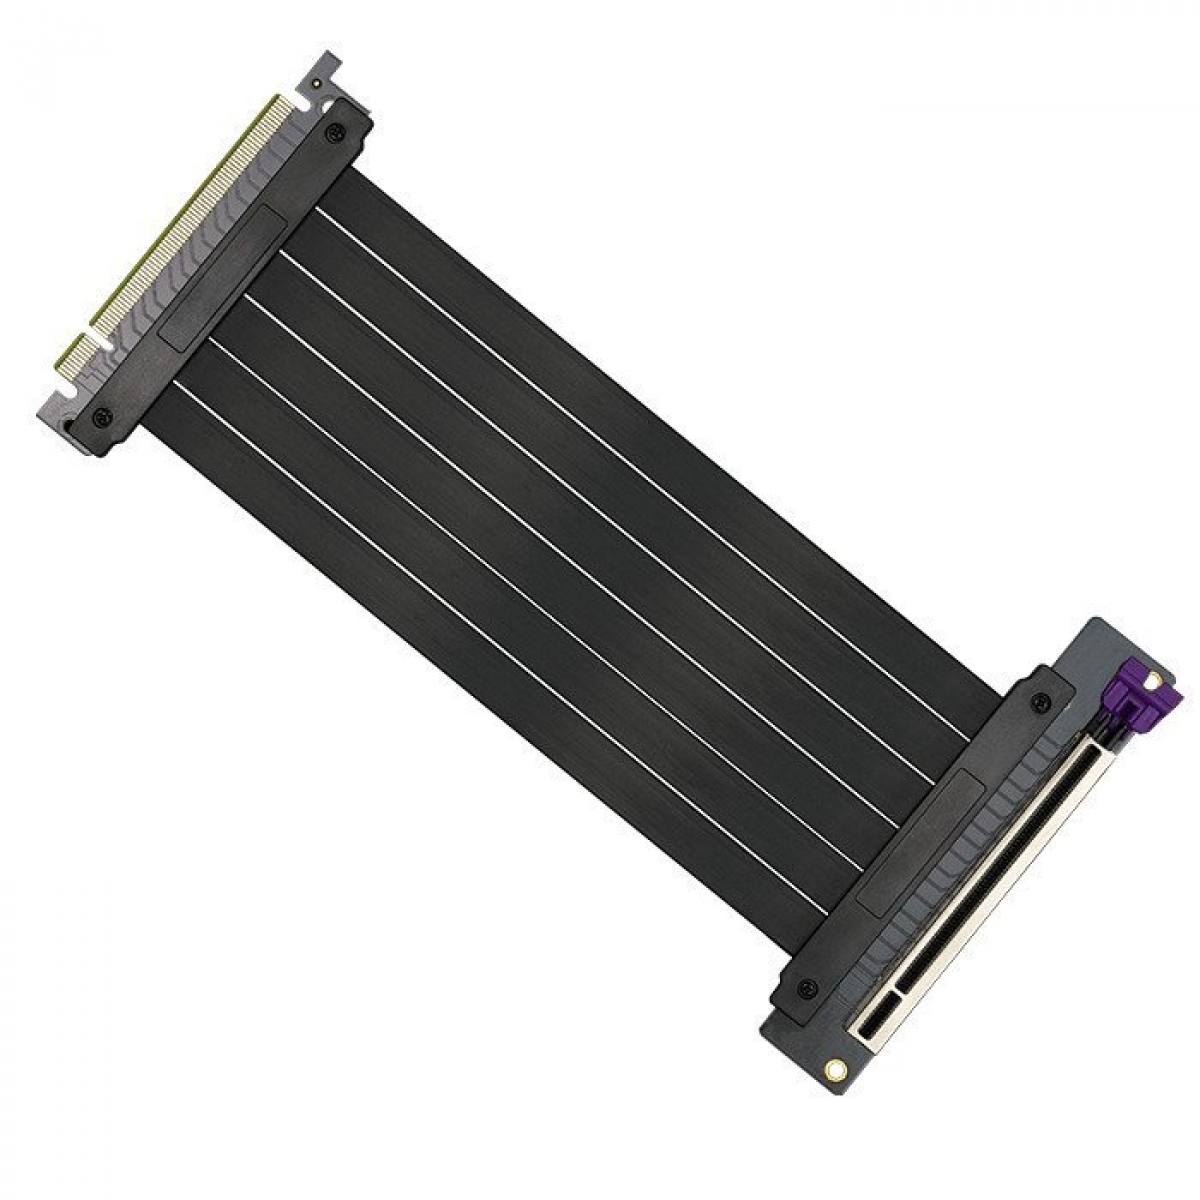 Cáp nối Cooler Master Riser Cable PCIe 3.0 x16 Ver. 2 - 200mm